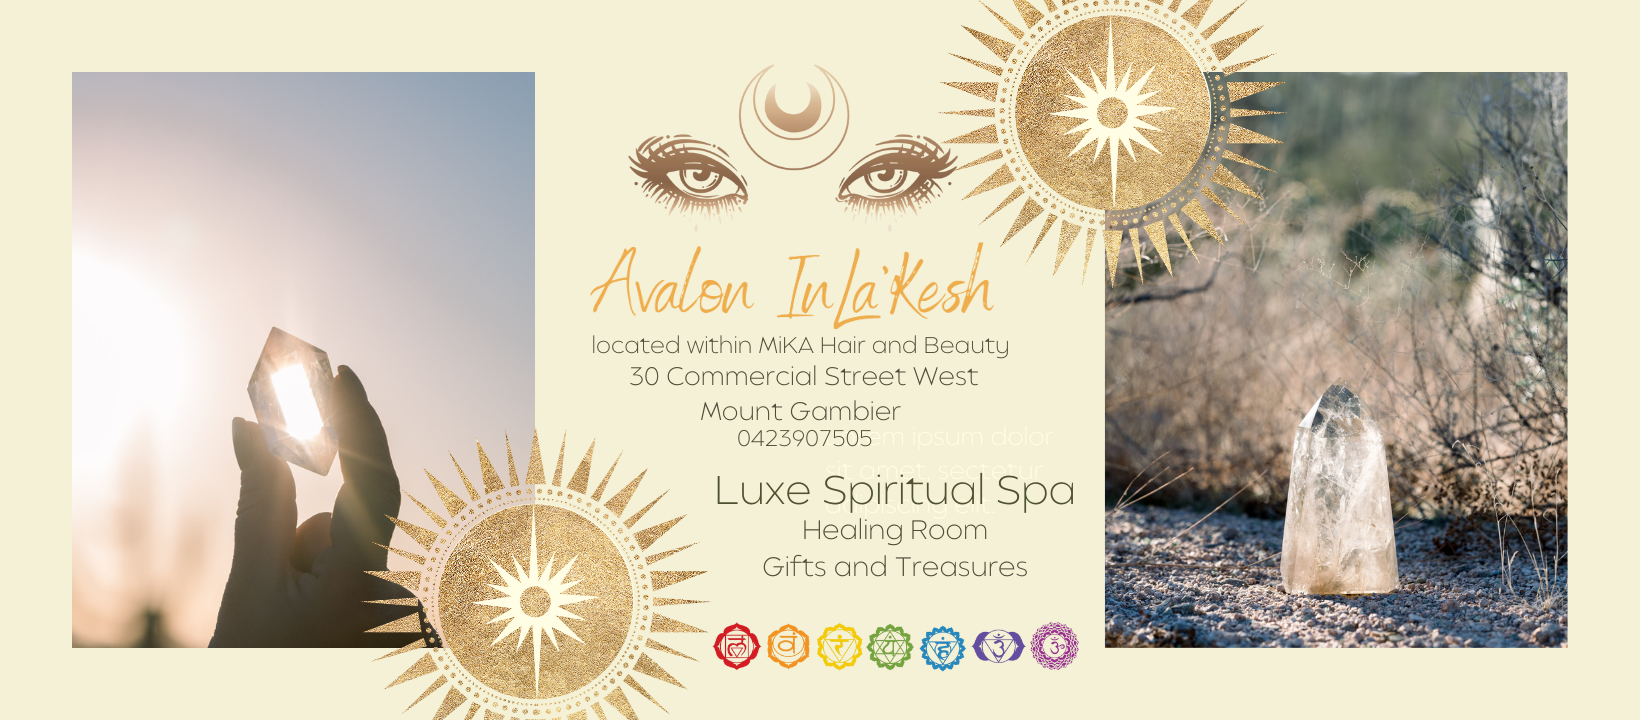 Avalon InLa'Kesh Luxe Spiritual Spa, Healing Room, Gifts & Treasures. 